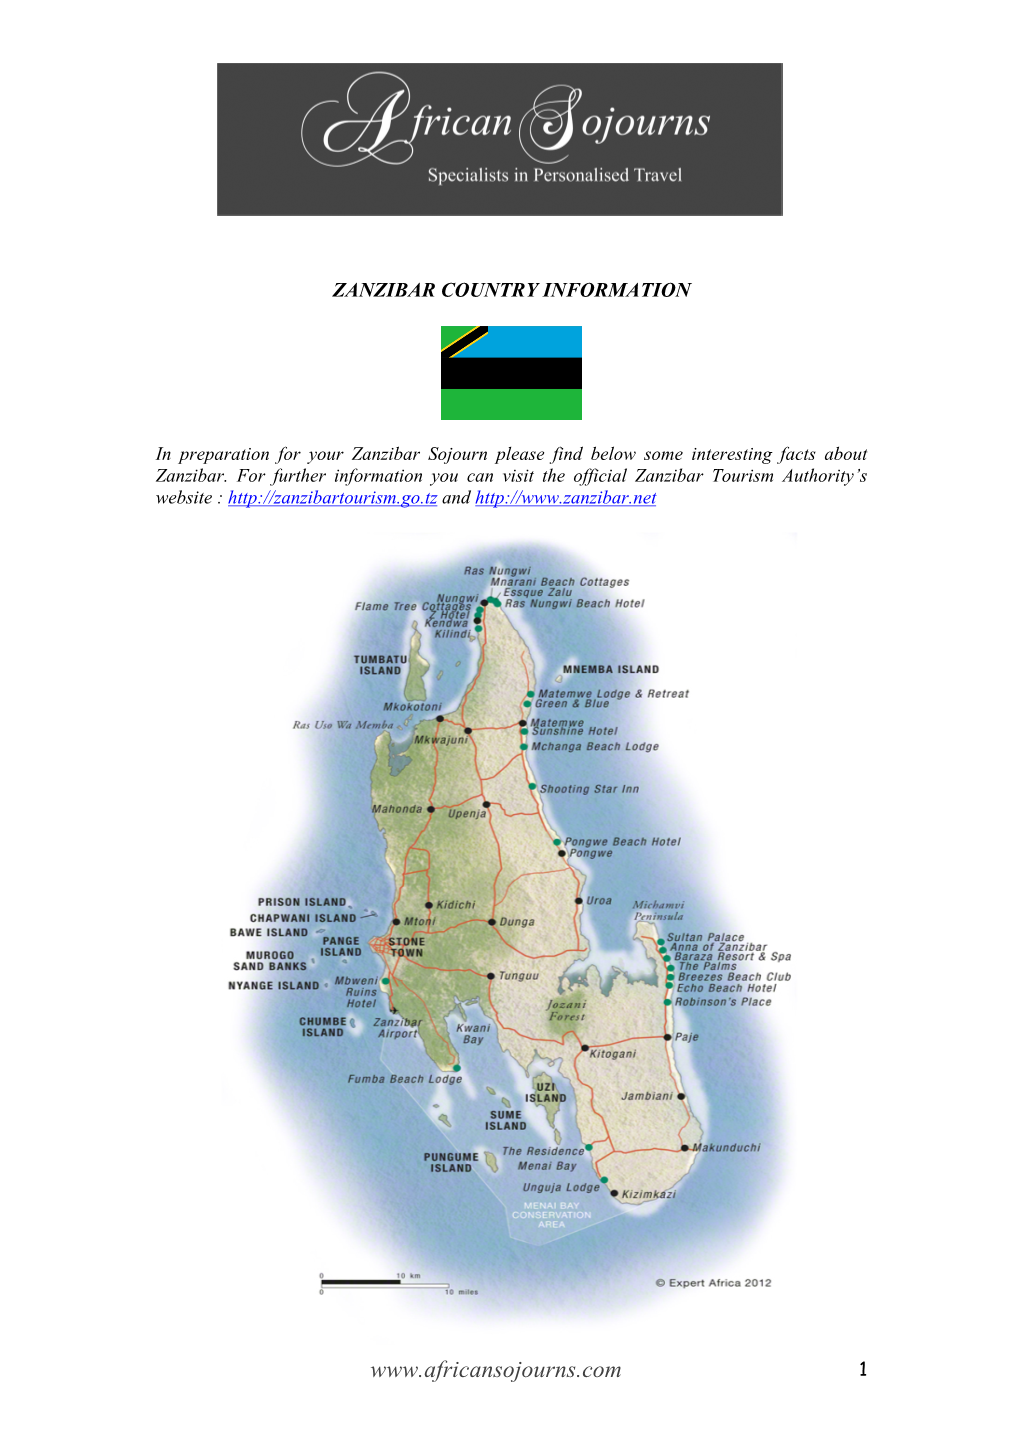 Zanzibar Country Information